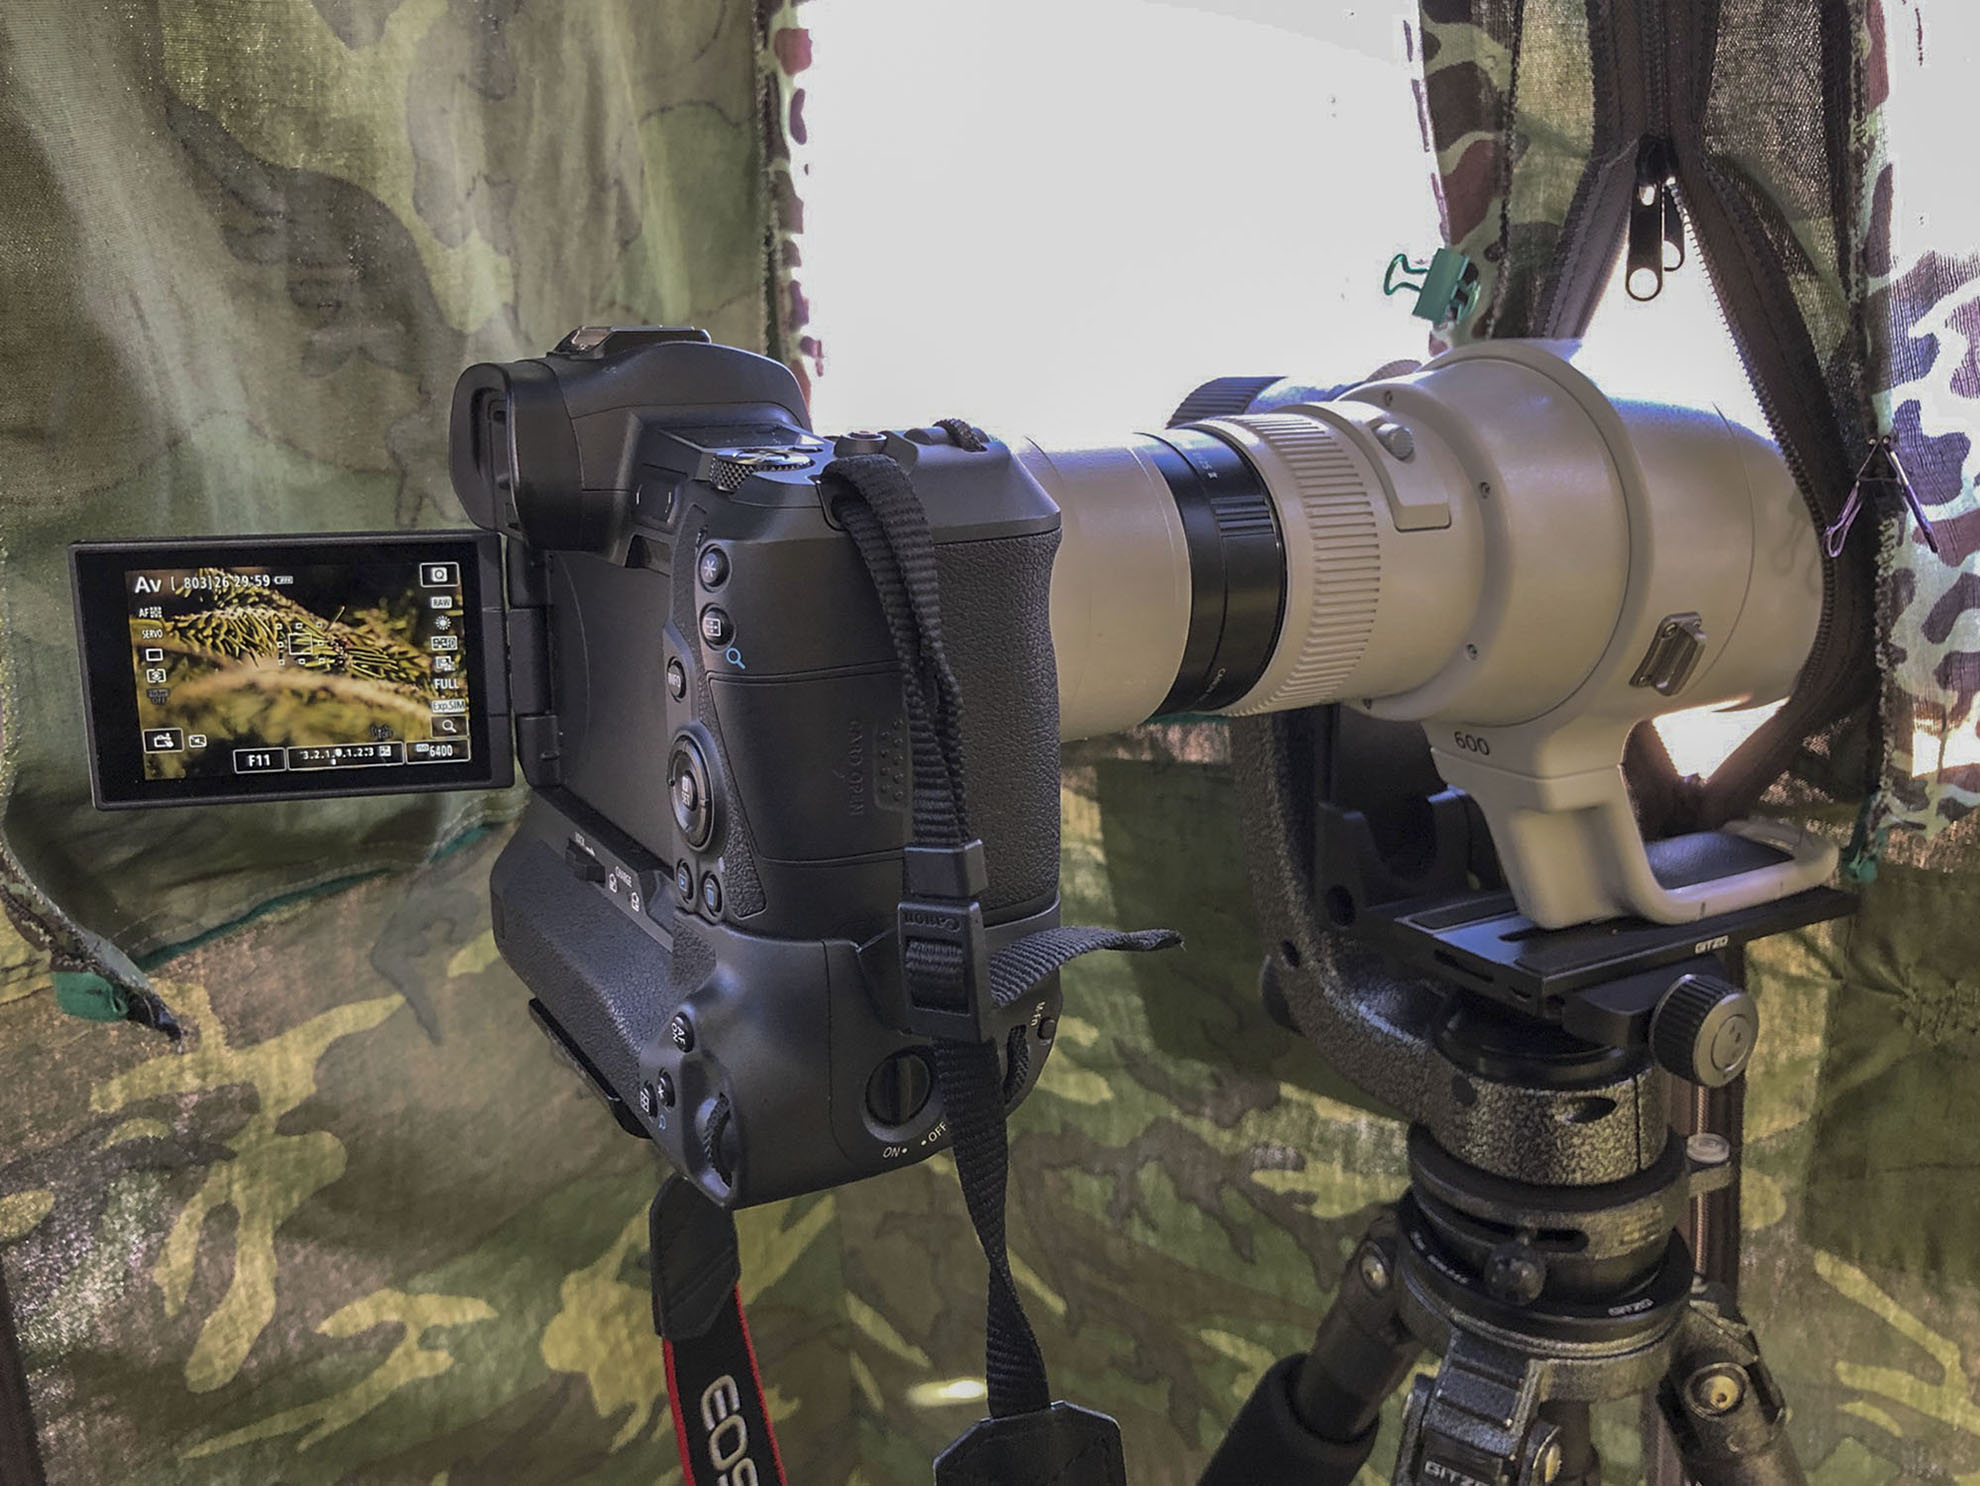 The Canon EOS R with the EF 600mm f/4L IS III USM, Extender EF 2x III, and an EF 25mm Extension Tube II